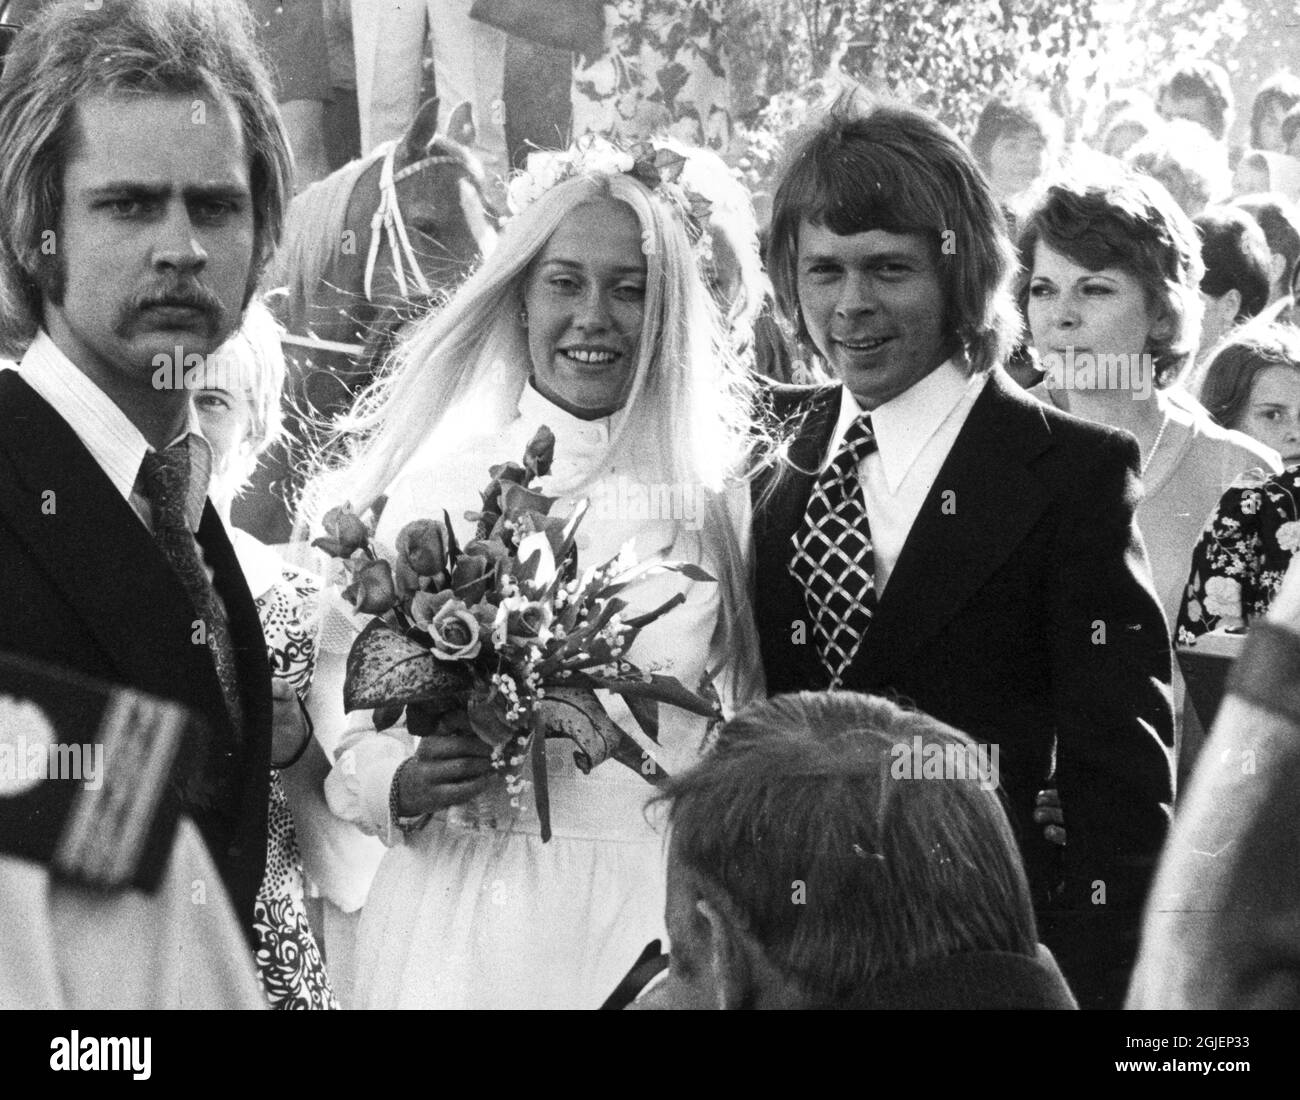 Abba's Agnetha Faltskog and Bjorn Ulvaeus get married Stock Photo - Alamy